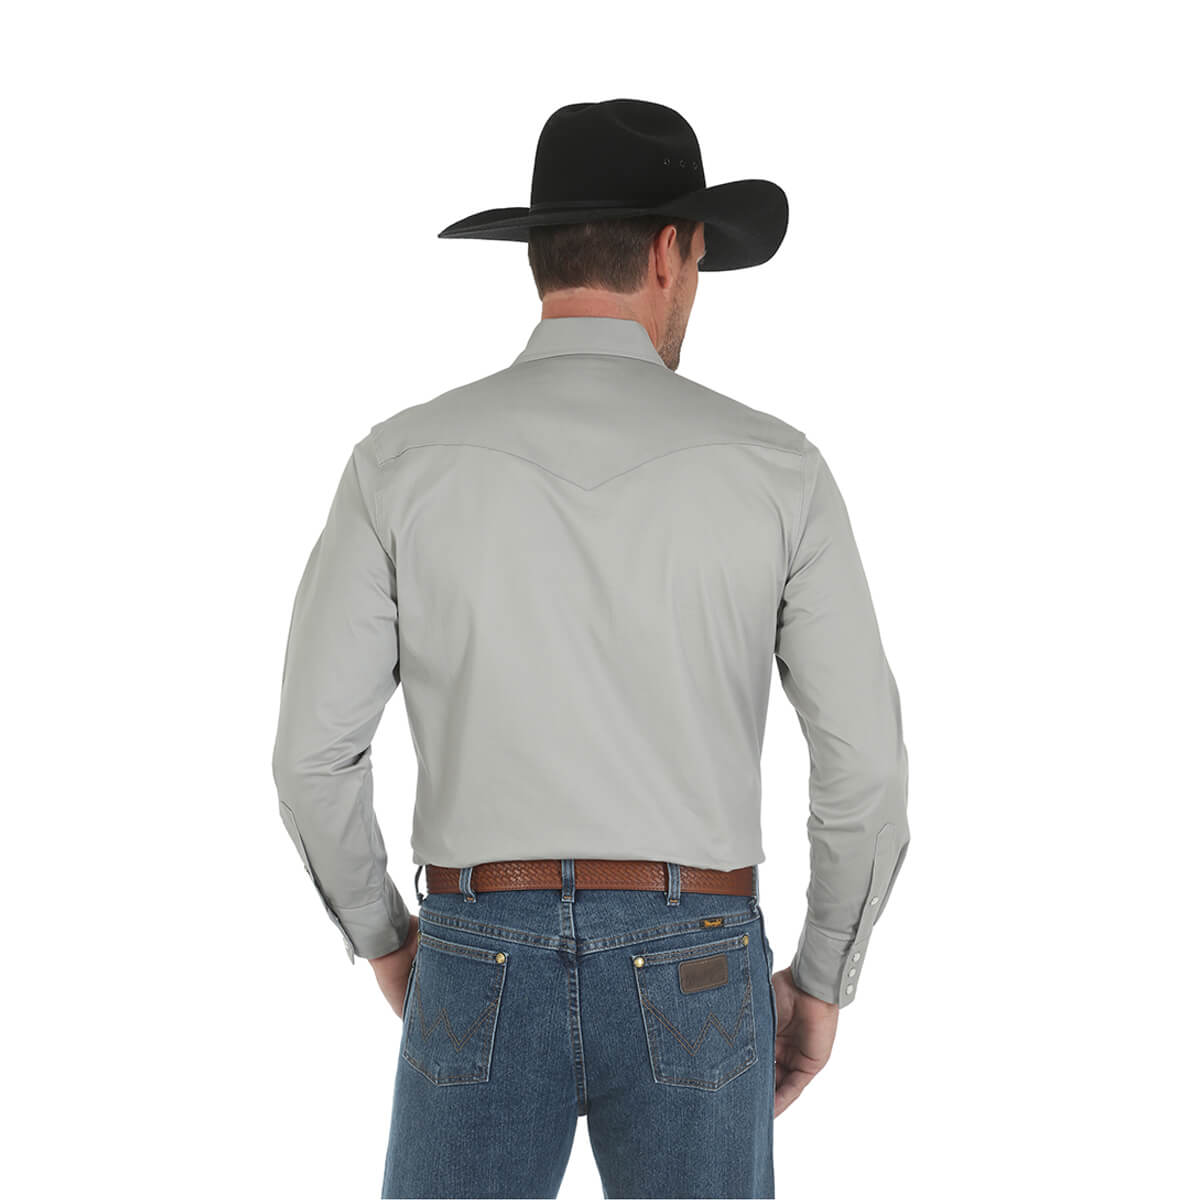 Men's Wrangler® Premium Performance Advanced Comfort Cowboy-Cut Long-Sleeved Shirt - Cement